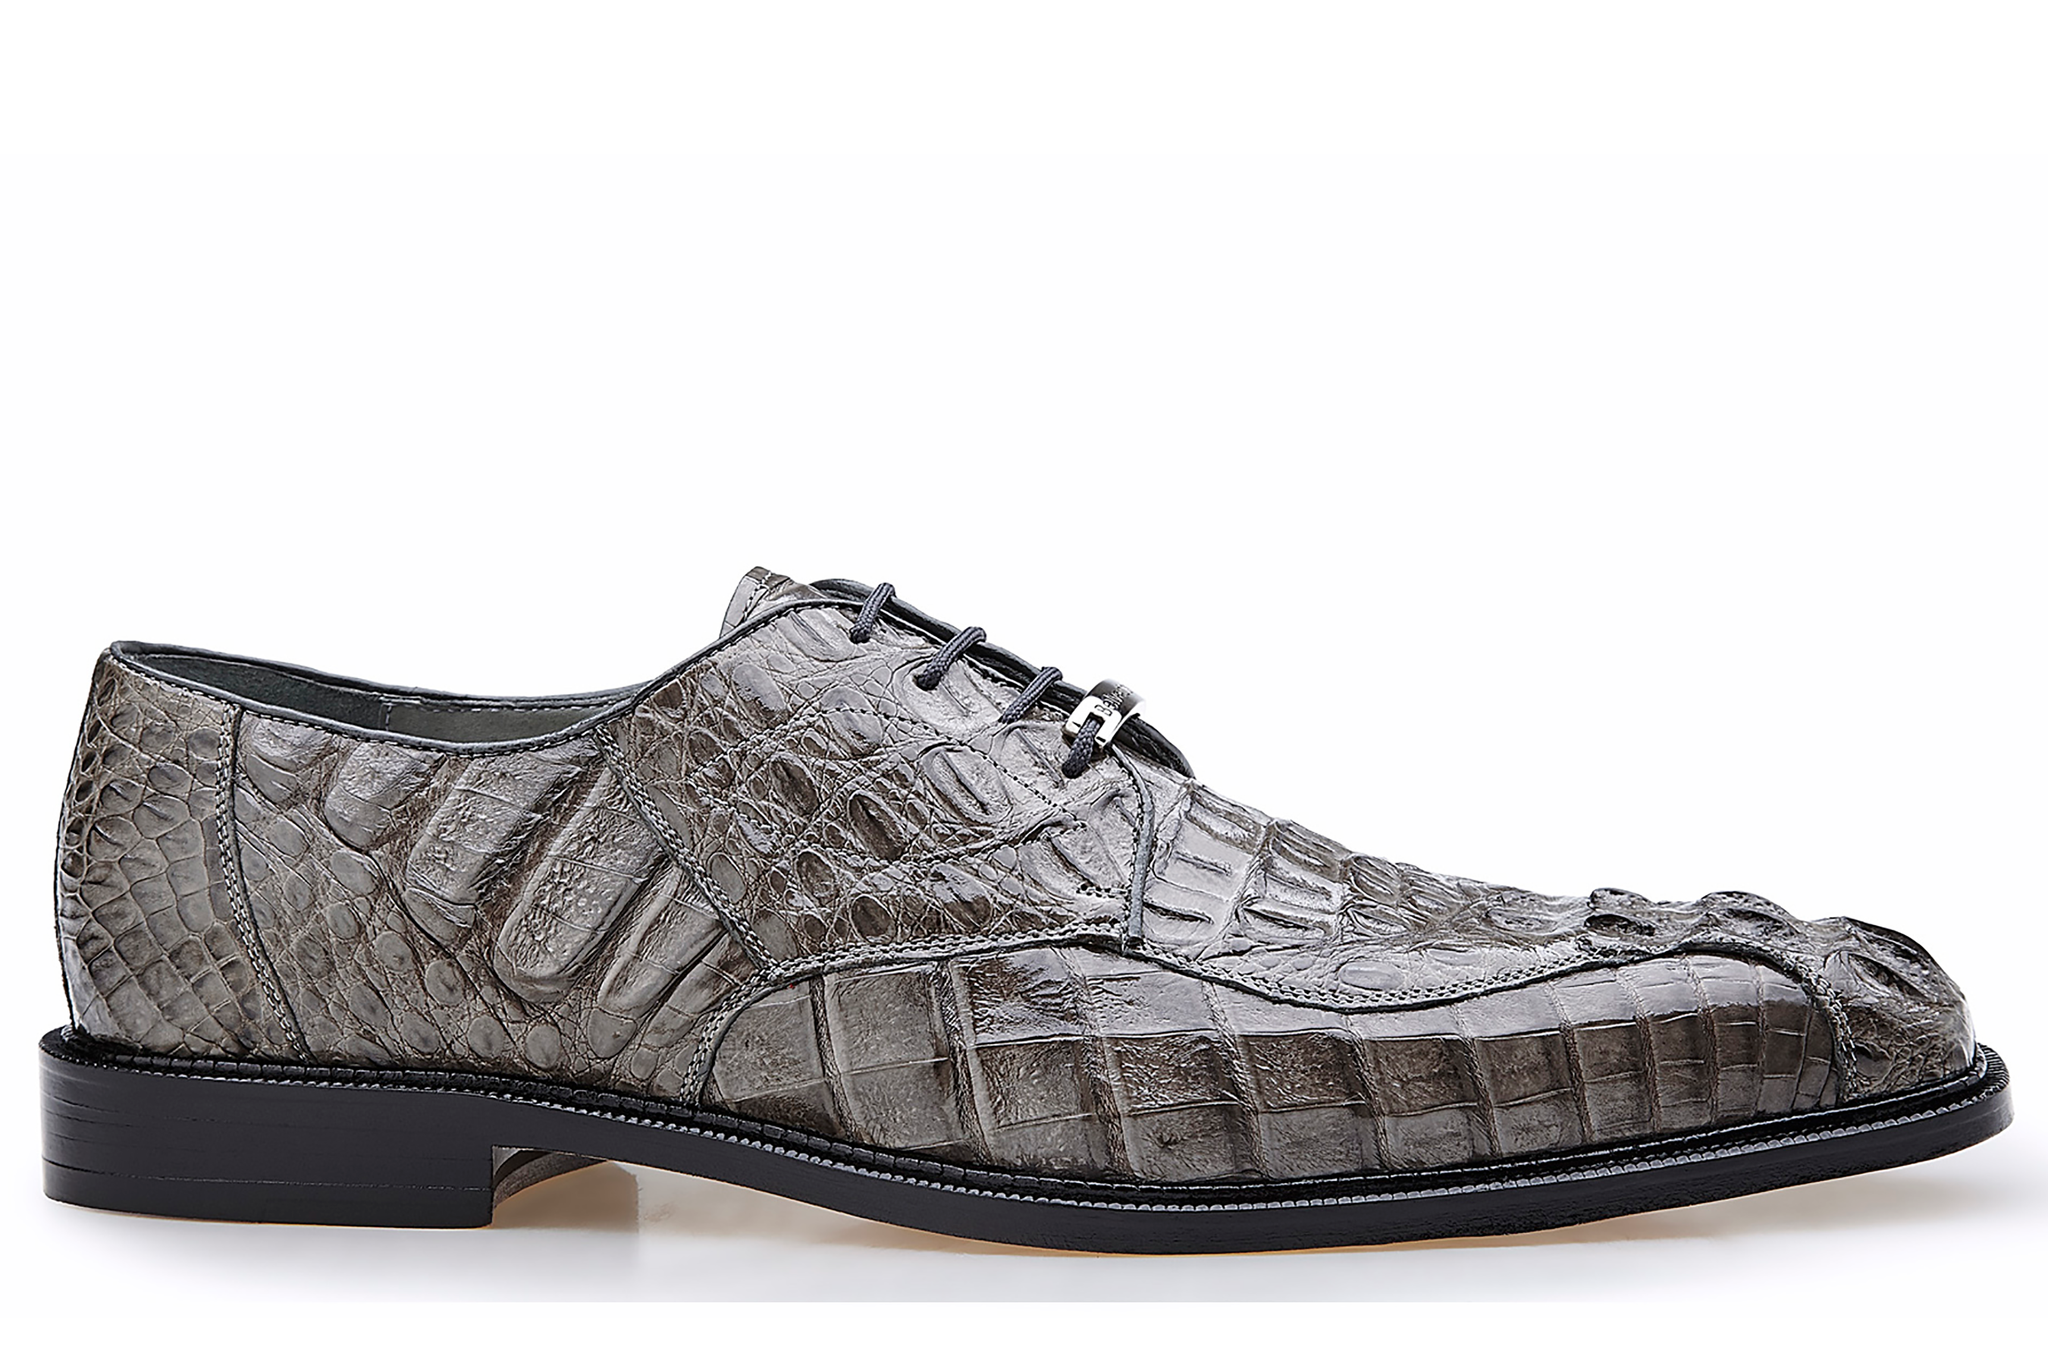 The Bomba Crocodile Leather Sneaker